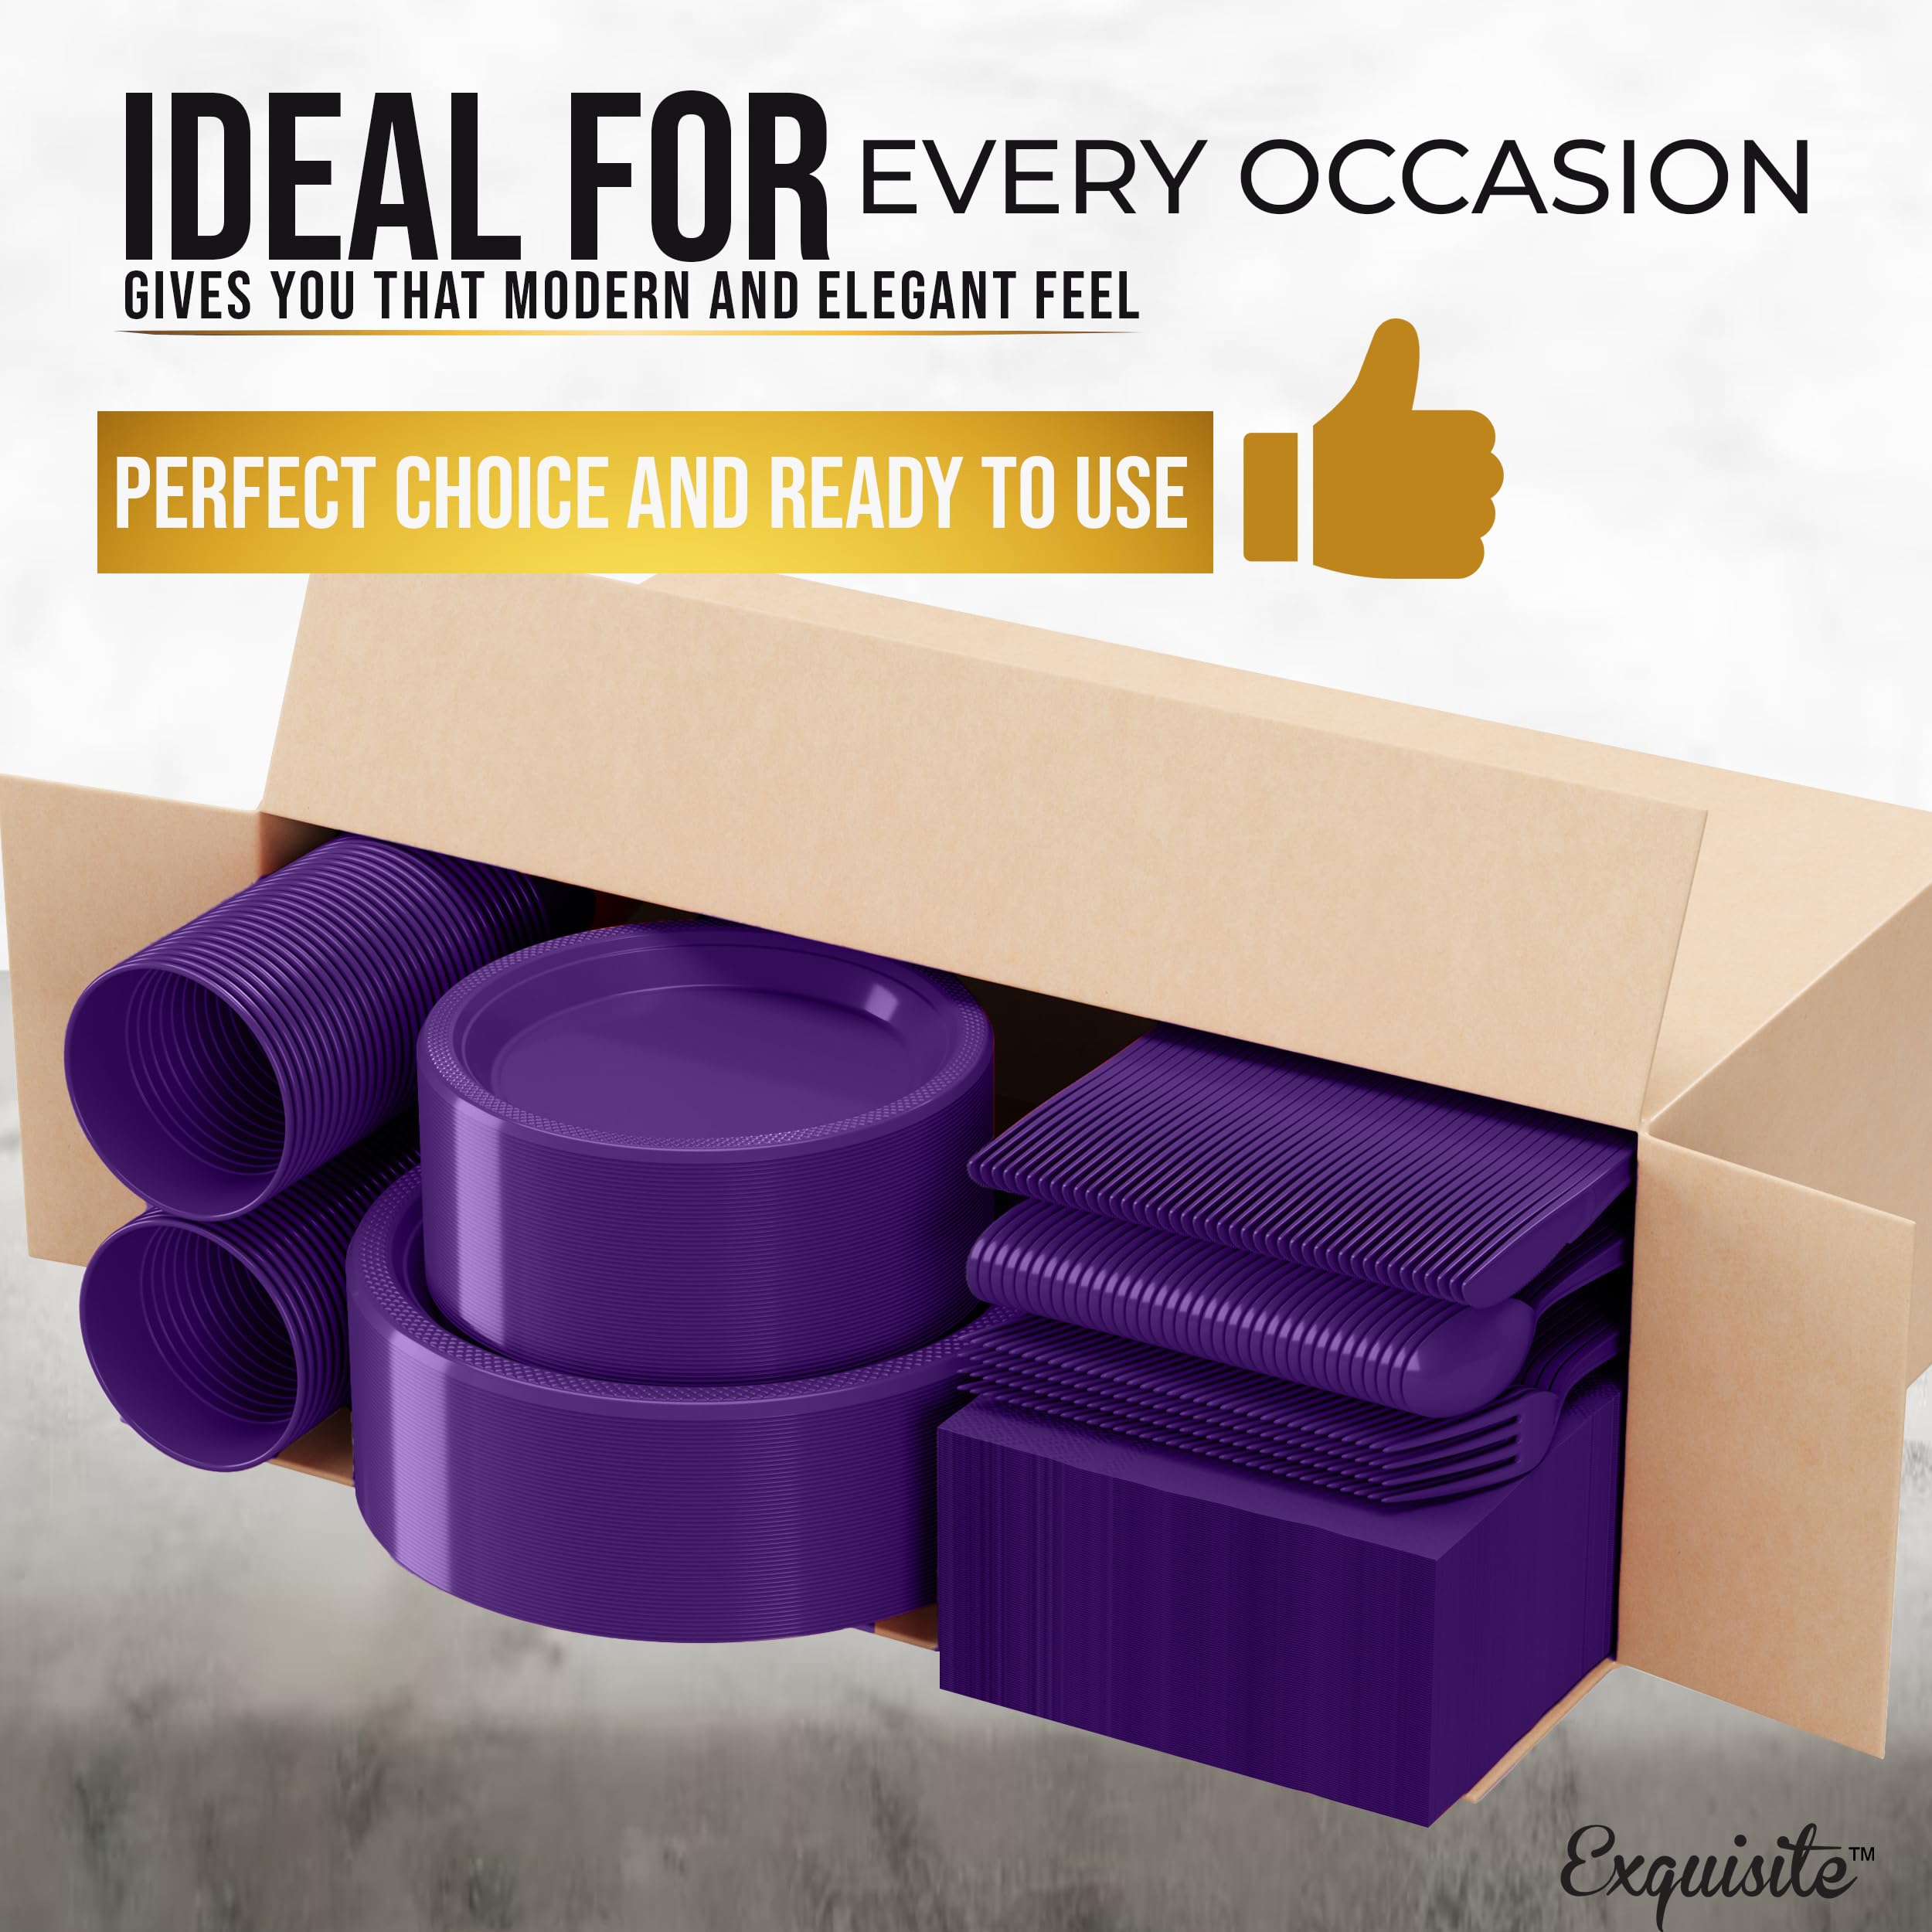 350 Pcs Purple Plastic Disposable Tableware Set